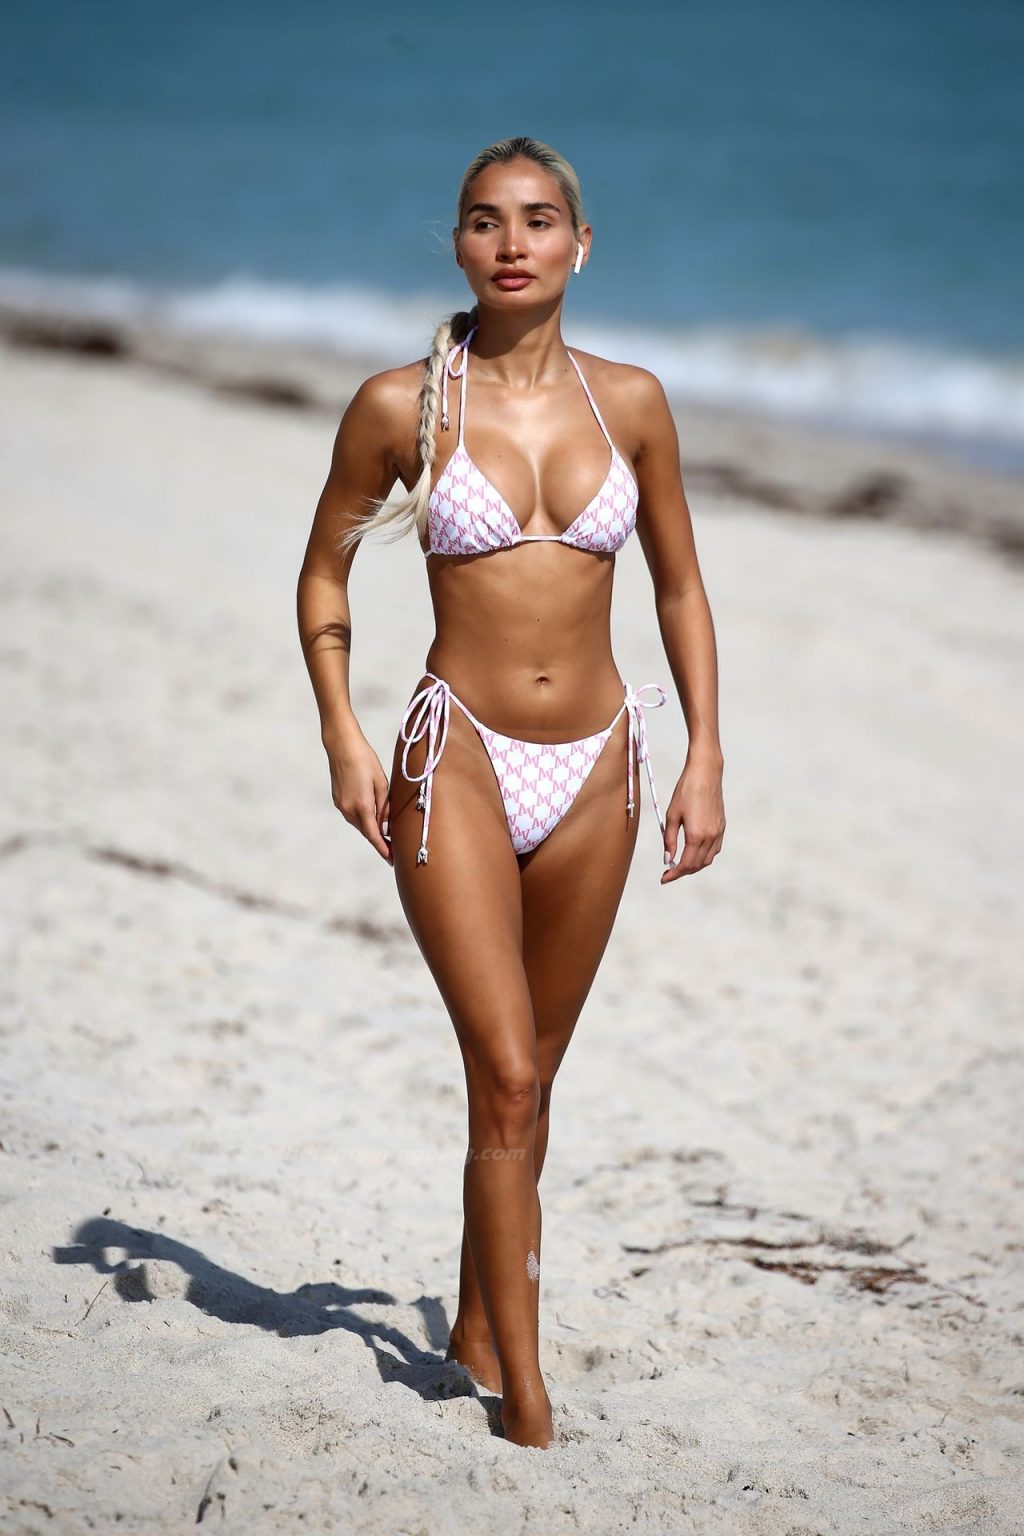 Pia Mia Looks Amazing in a Bikini on the Beach in Miami (57 Photos)